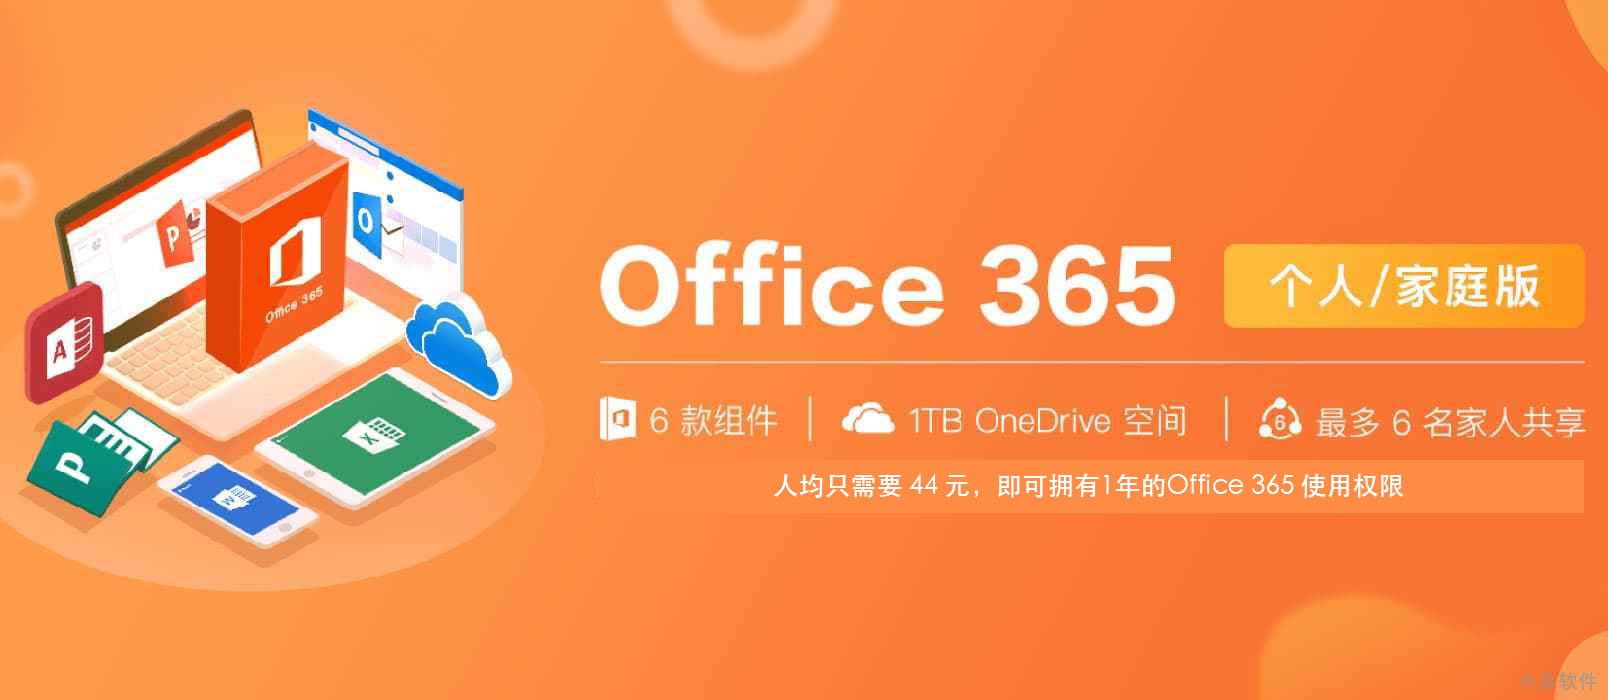 Office 365 家庭版又有优惠啦，价格探底 1